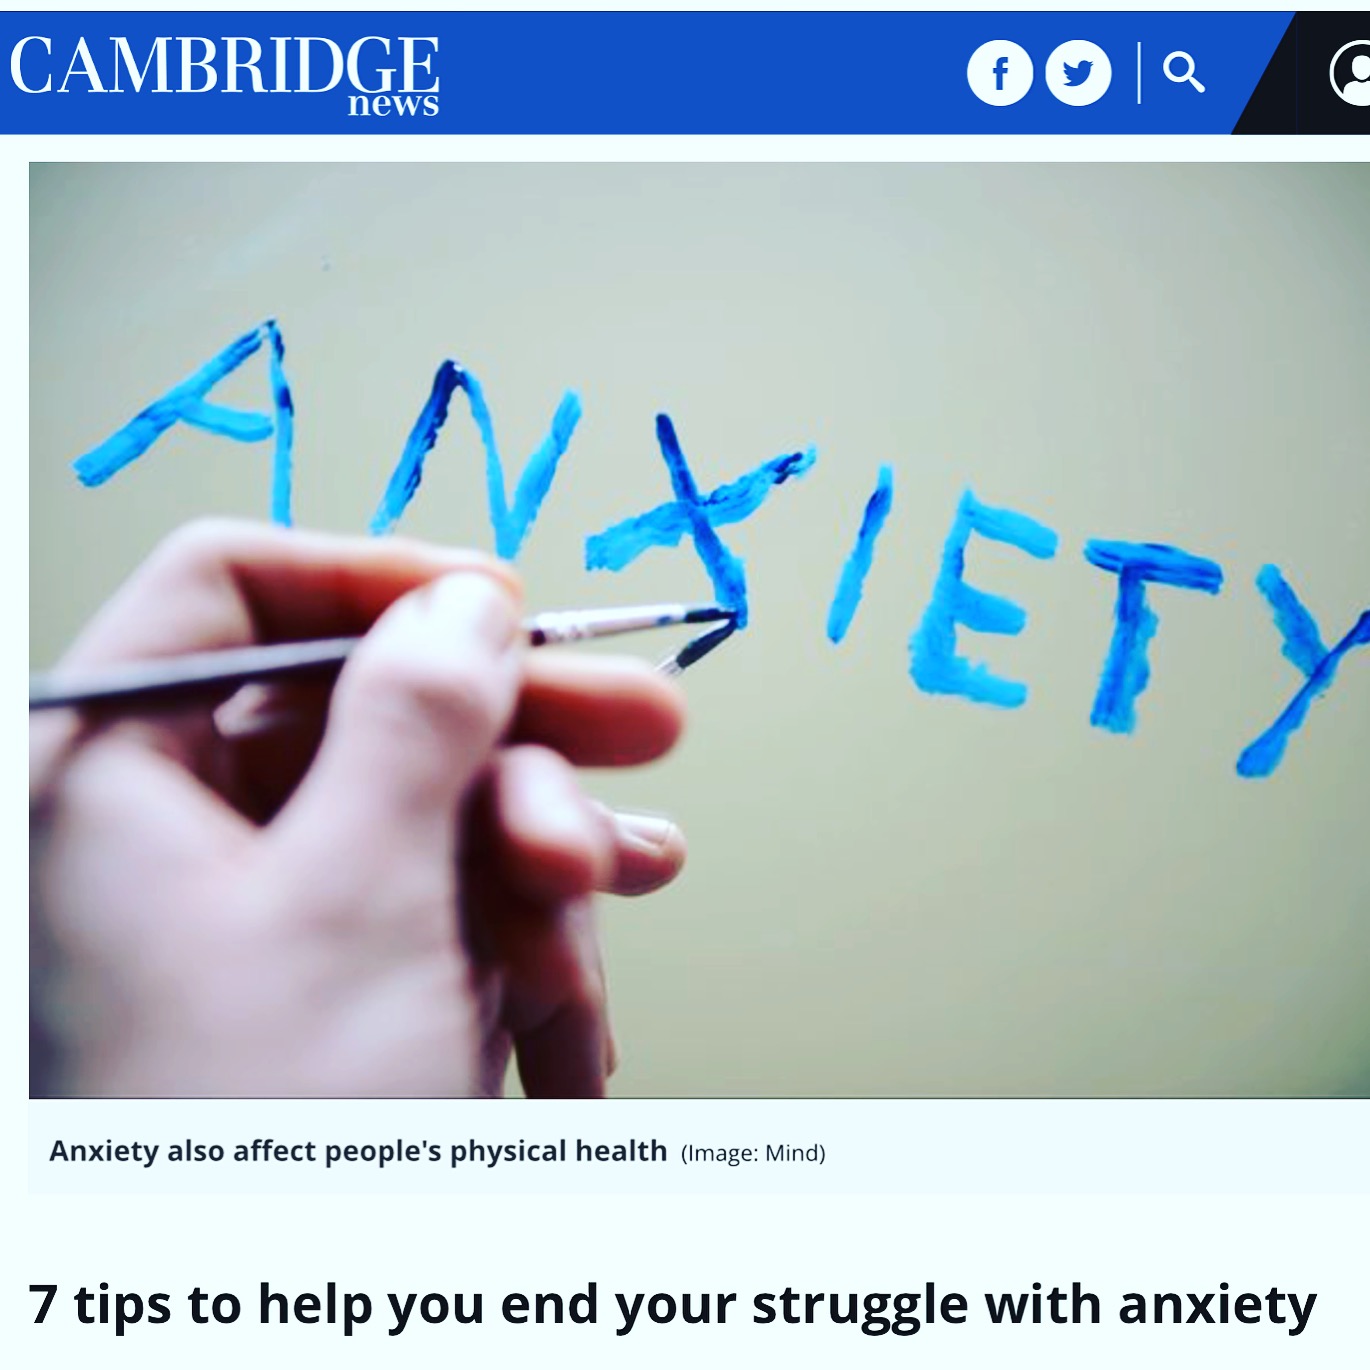 world mental health day anxiety help cambridge news